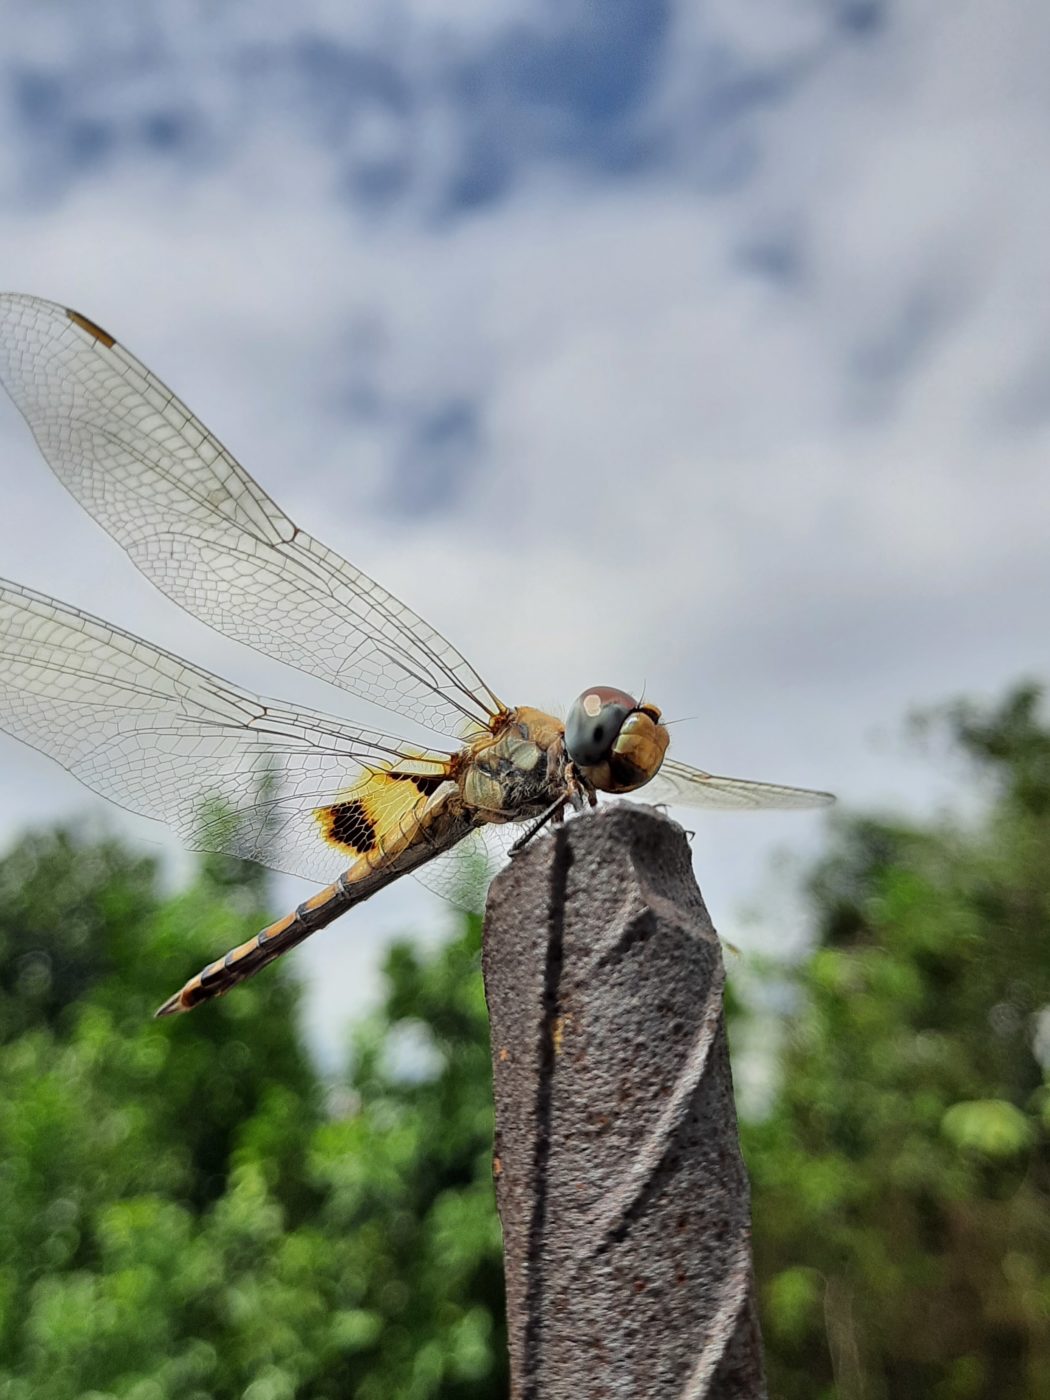 Common chaser dragonfly, Potamarcha congener